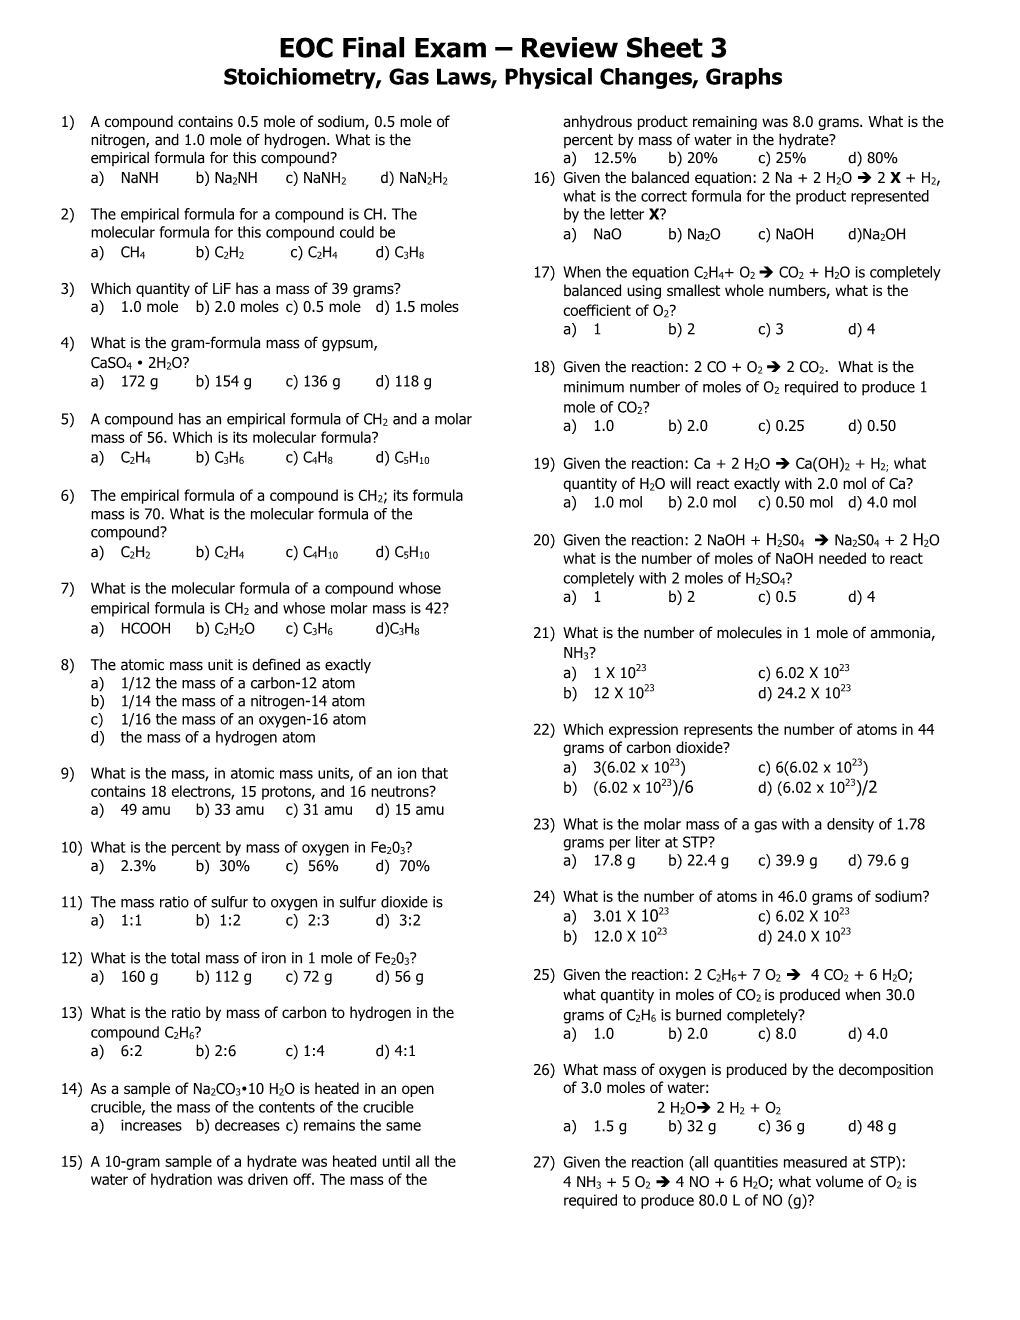 EOC Final Exam Review Sheet 3